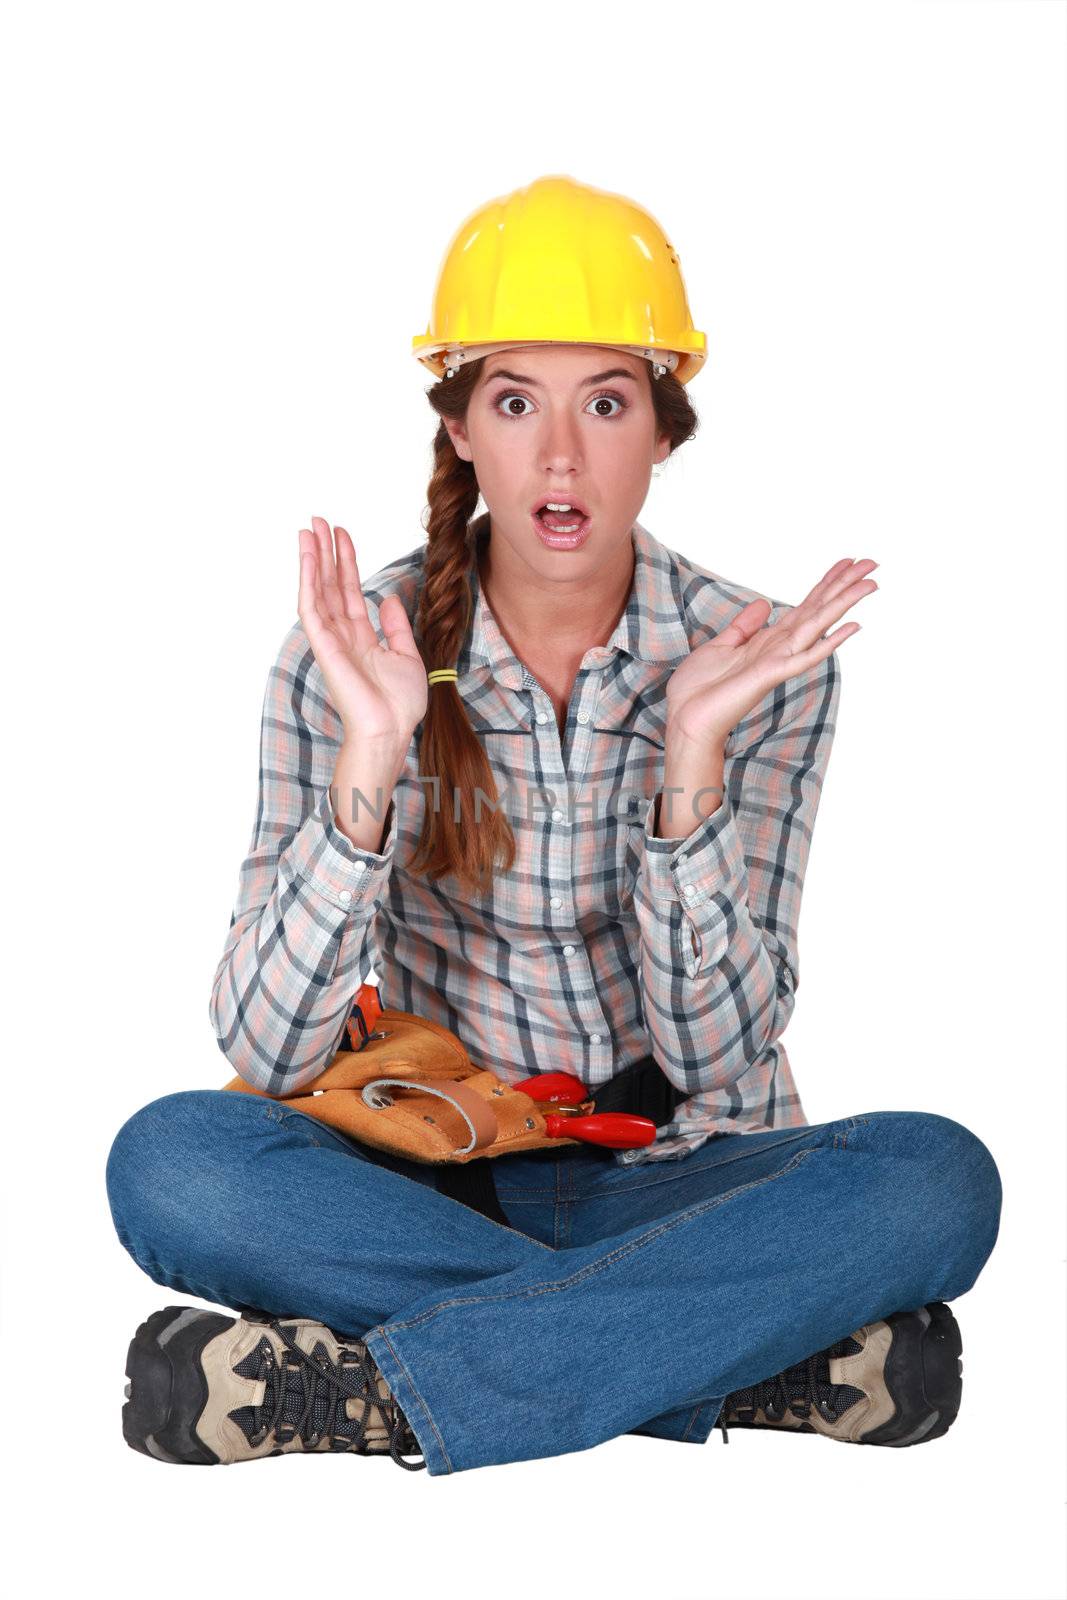 A clueless female construction worker.